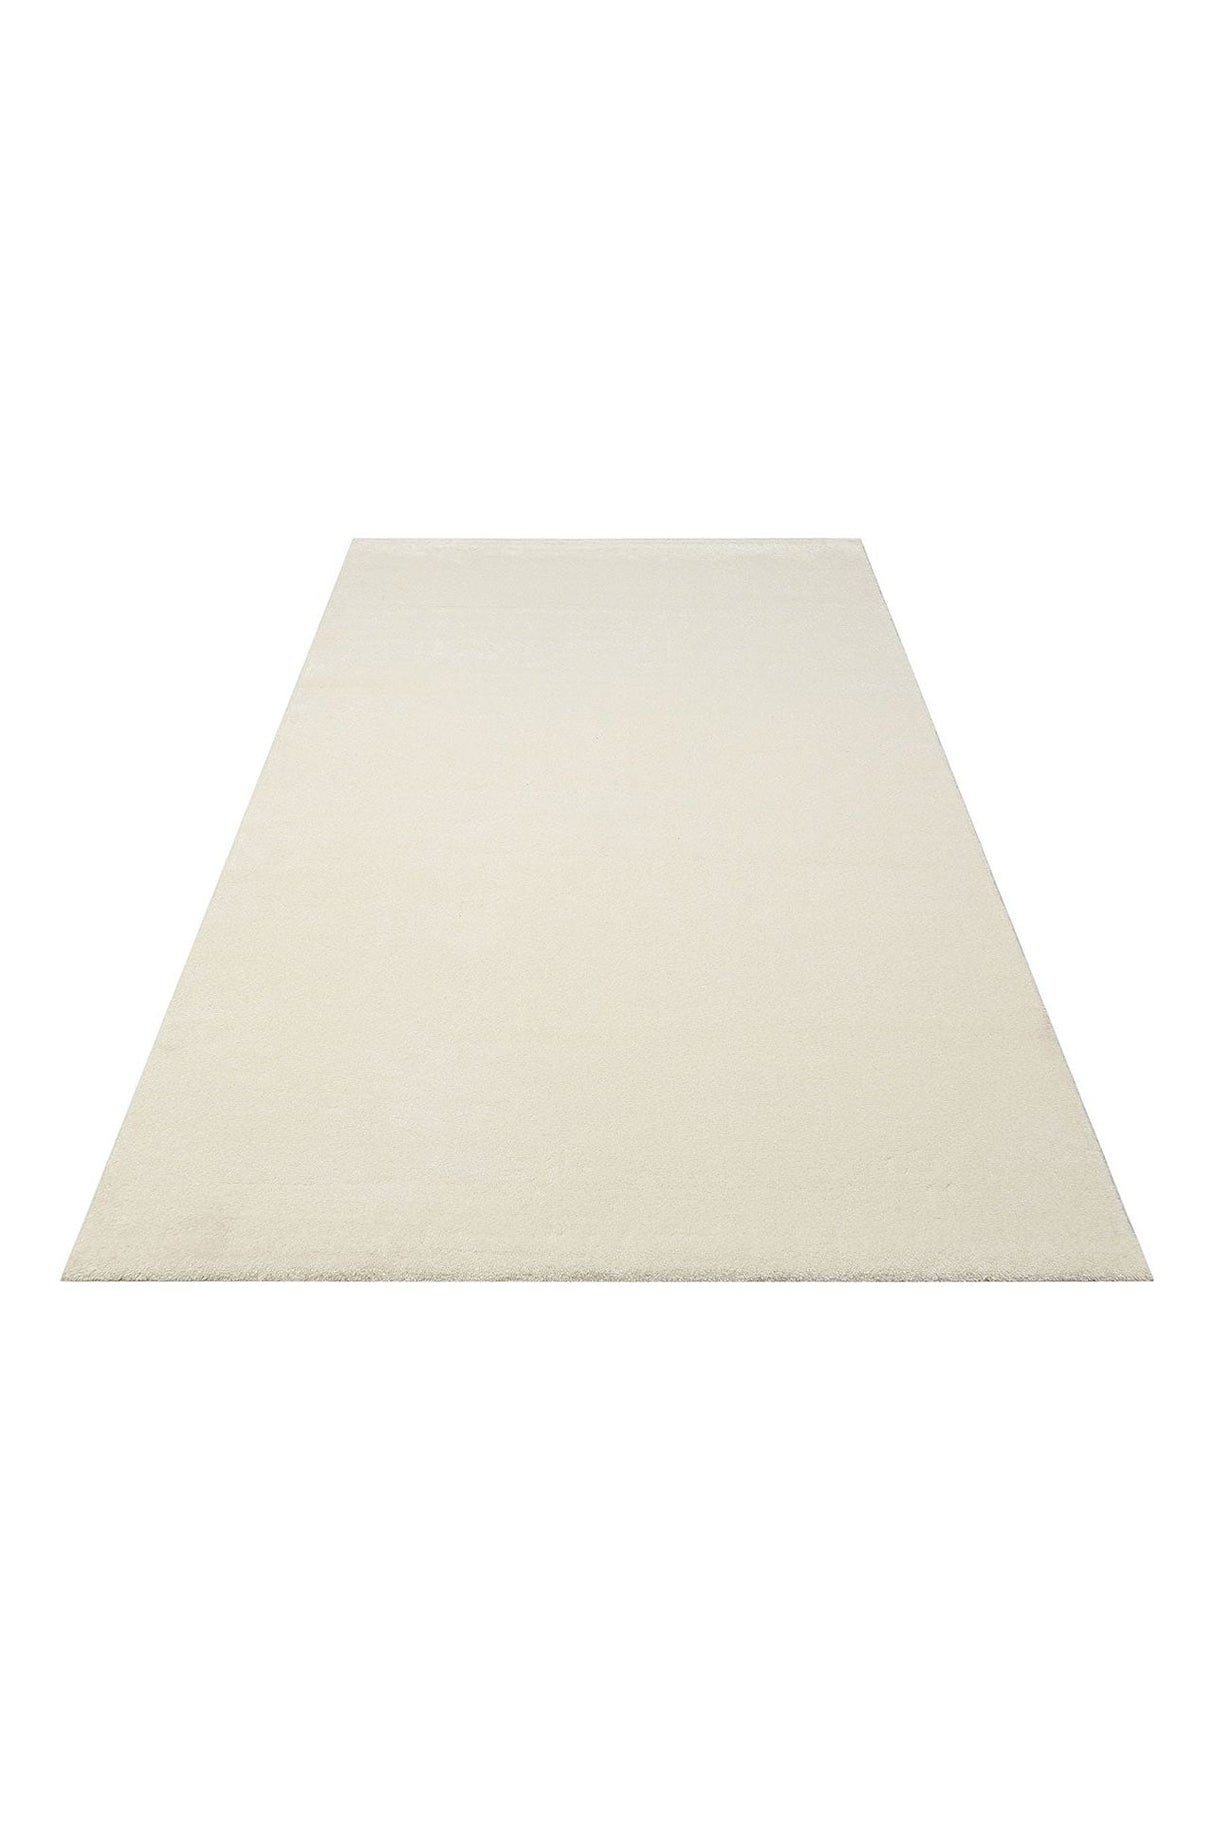 #Turkish_Carpets_Rugs# #Modern_Carpets# #Abrash_Carpets#Lt Plain White